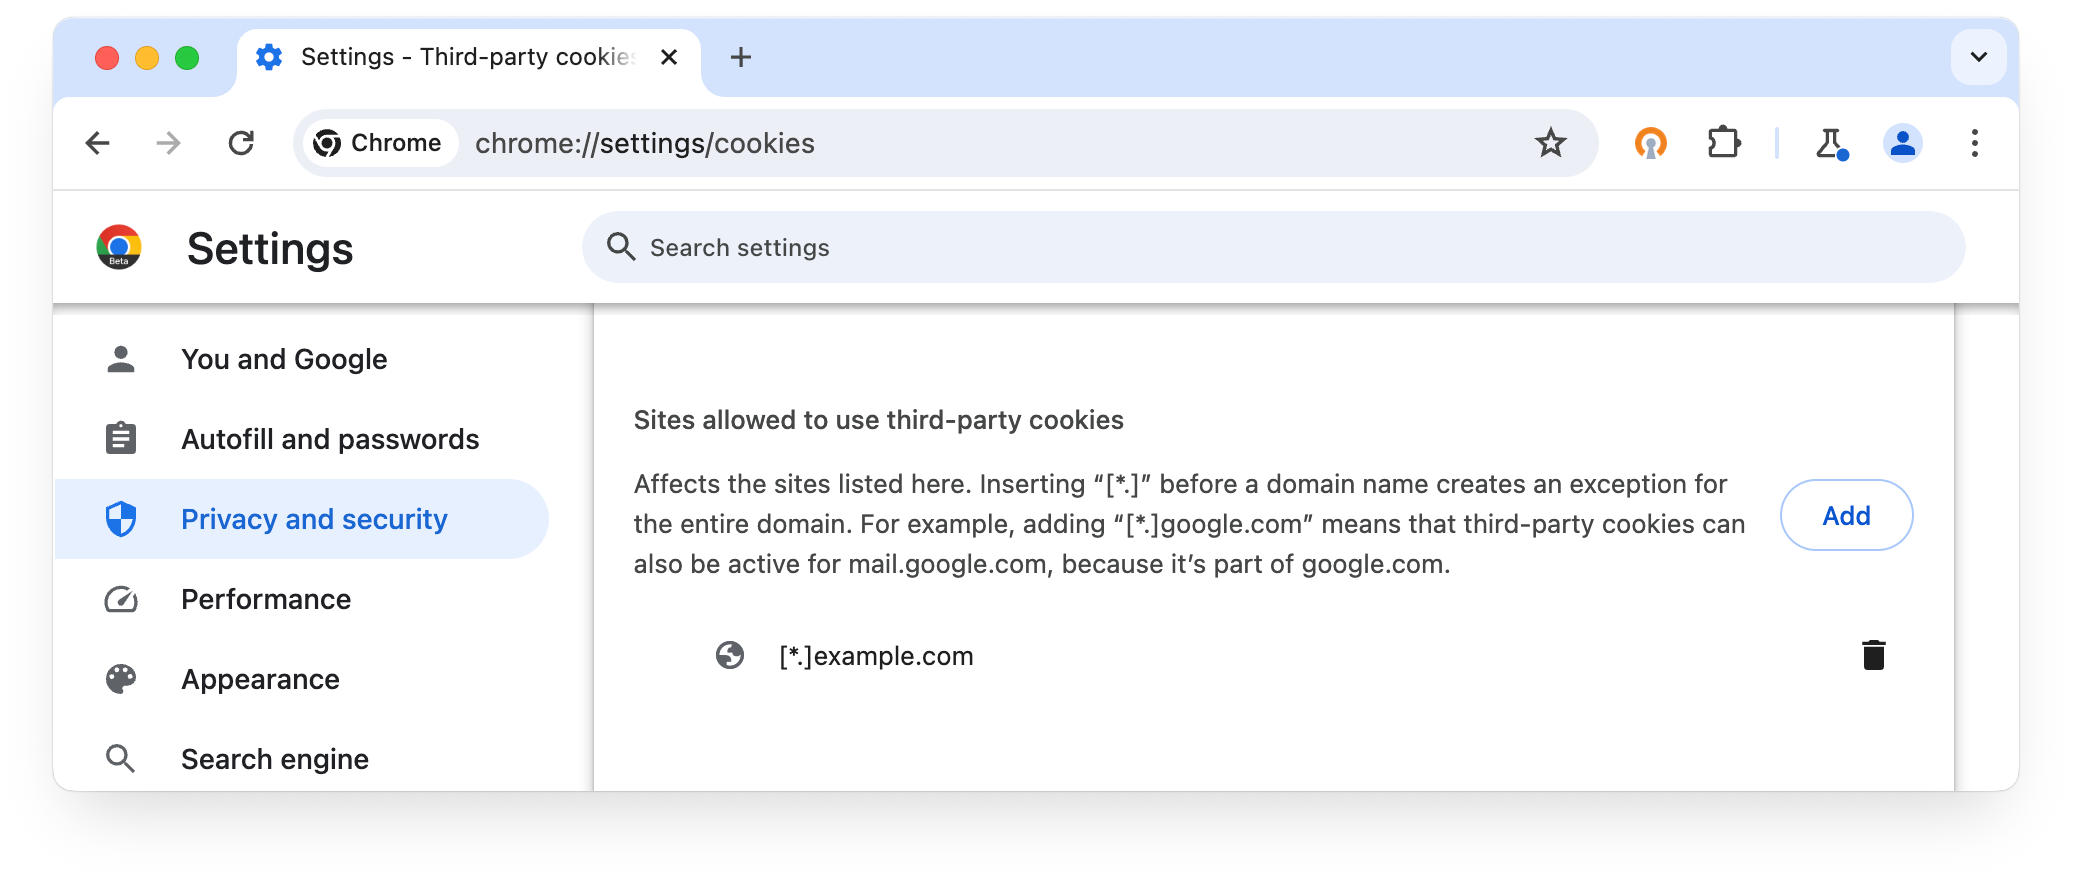 chrome://settings/cookies: אתרים שמורשים להשתמש בקובצי cookie של צד שלישי